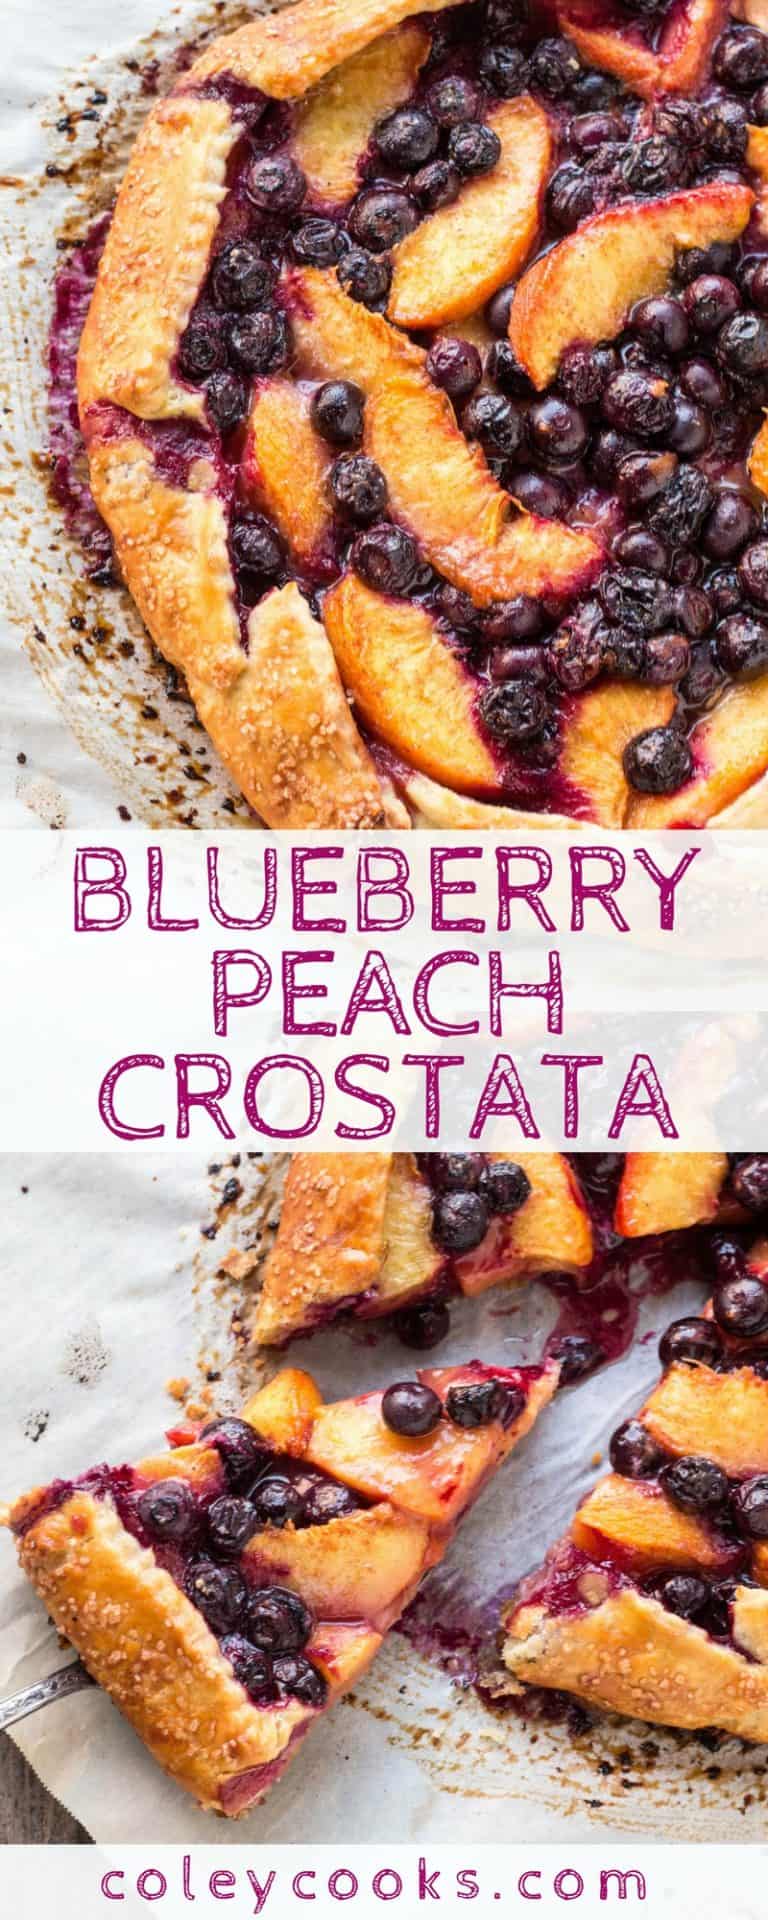 Blueberry Peach Crostata - Coley Cooks